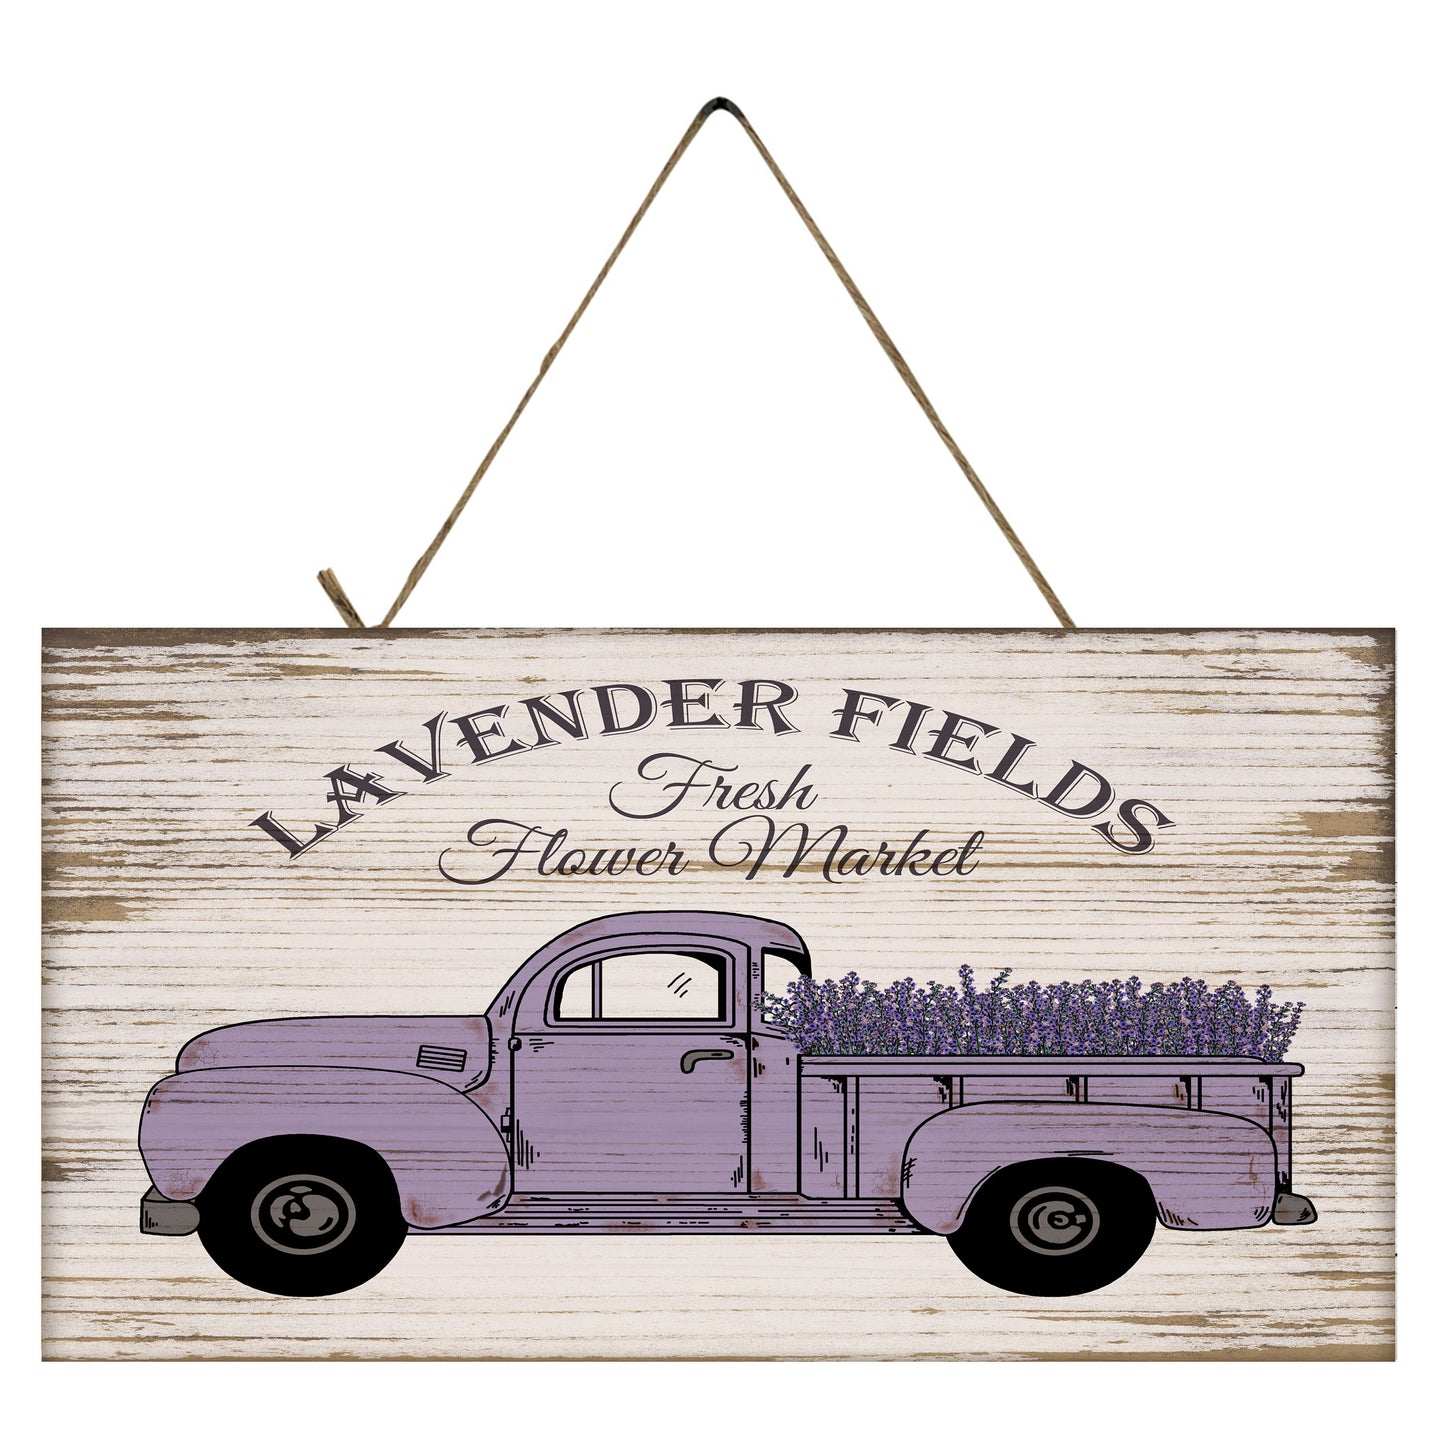 Lavender Fields Flower Market Vintage Truck Printed Handmade Wood Sign